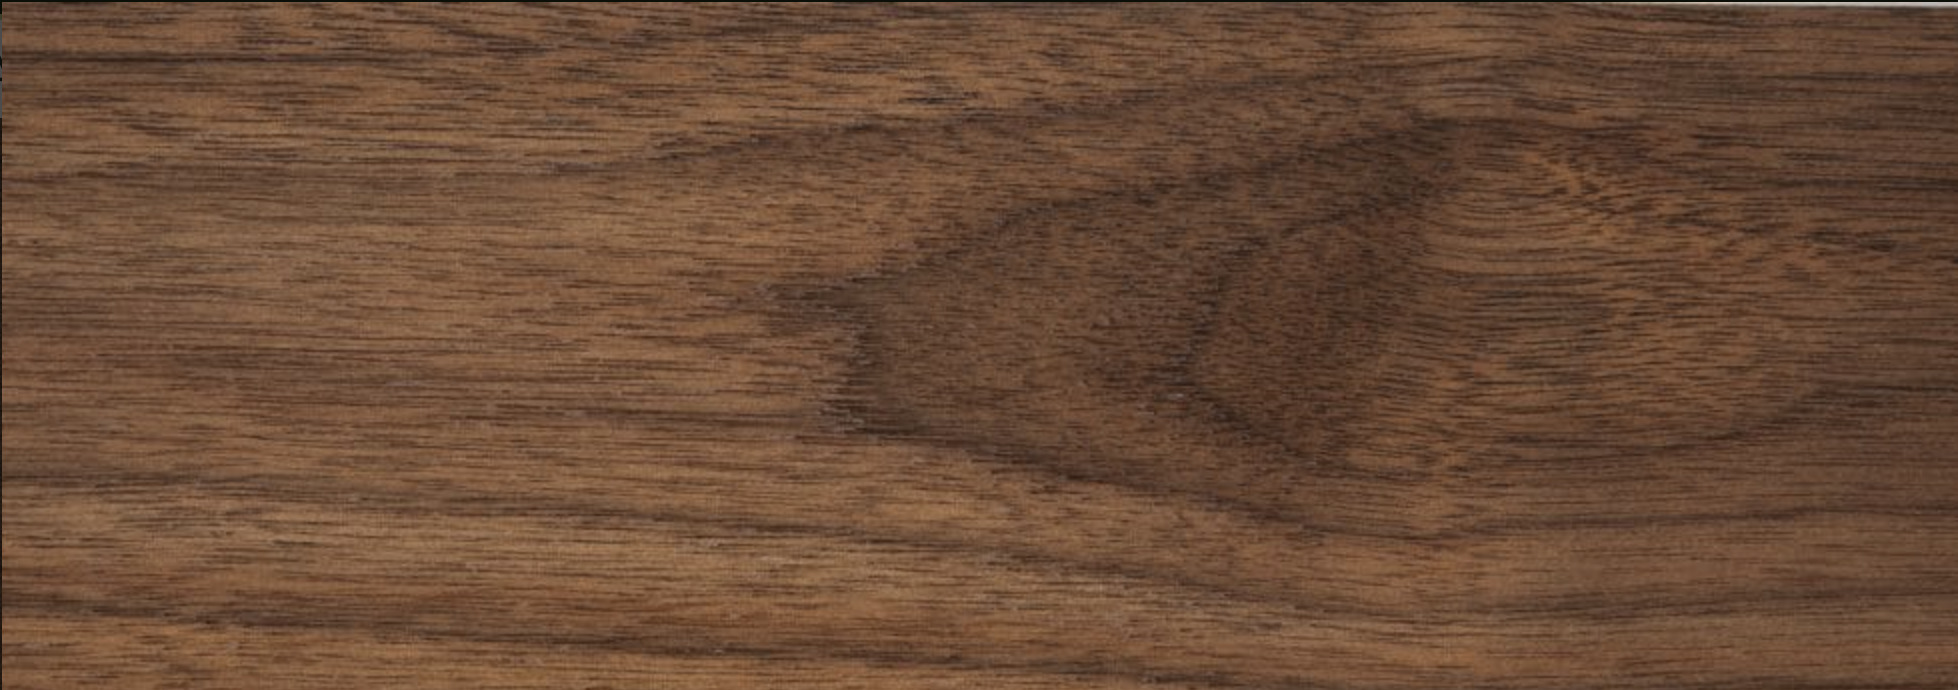 walnut-choosing-best-wood-cutting-block-butcher-board